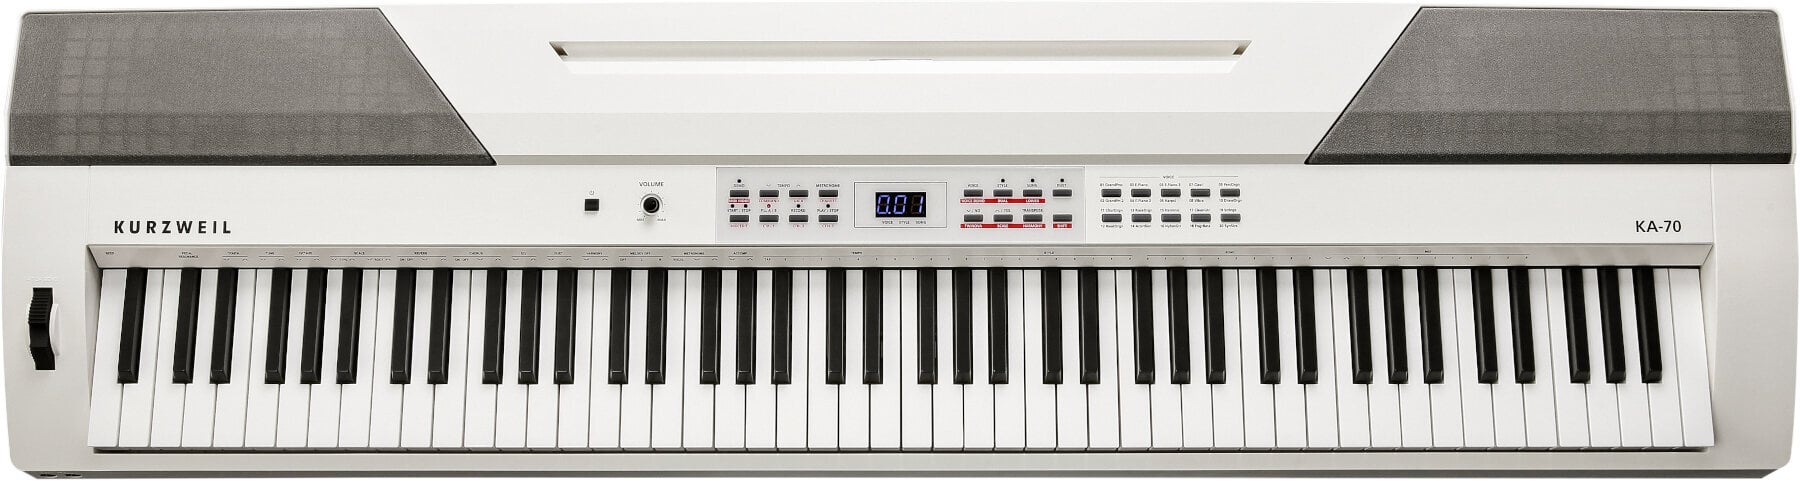 Cyfrowe stage pianino Kurzweil KA70 WH Cyfrowe stage pianino